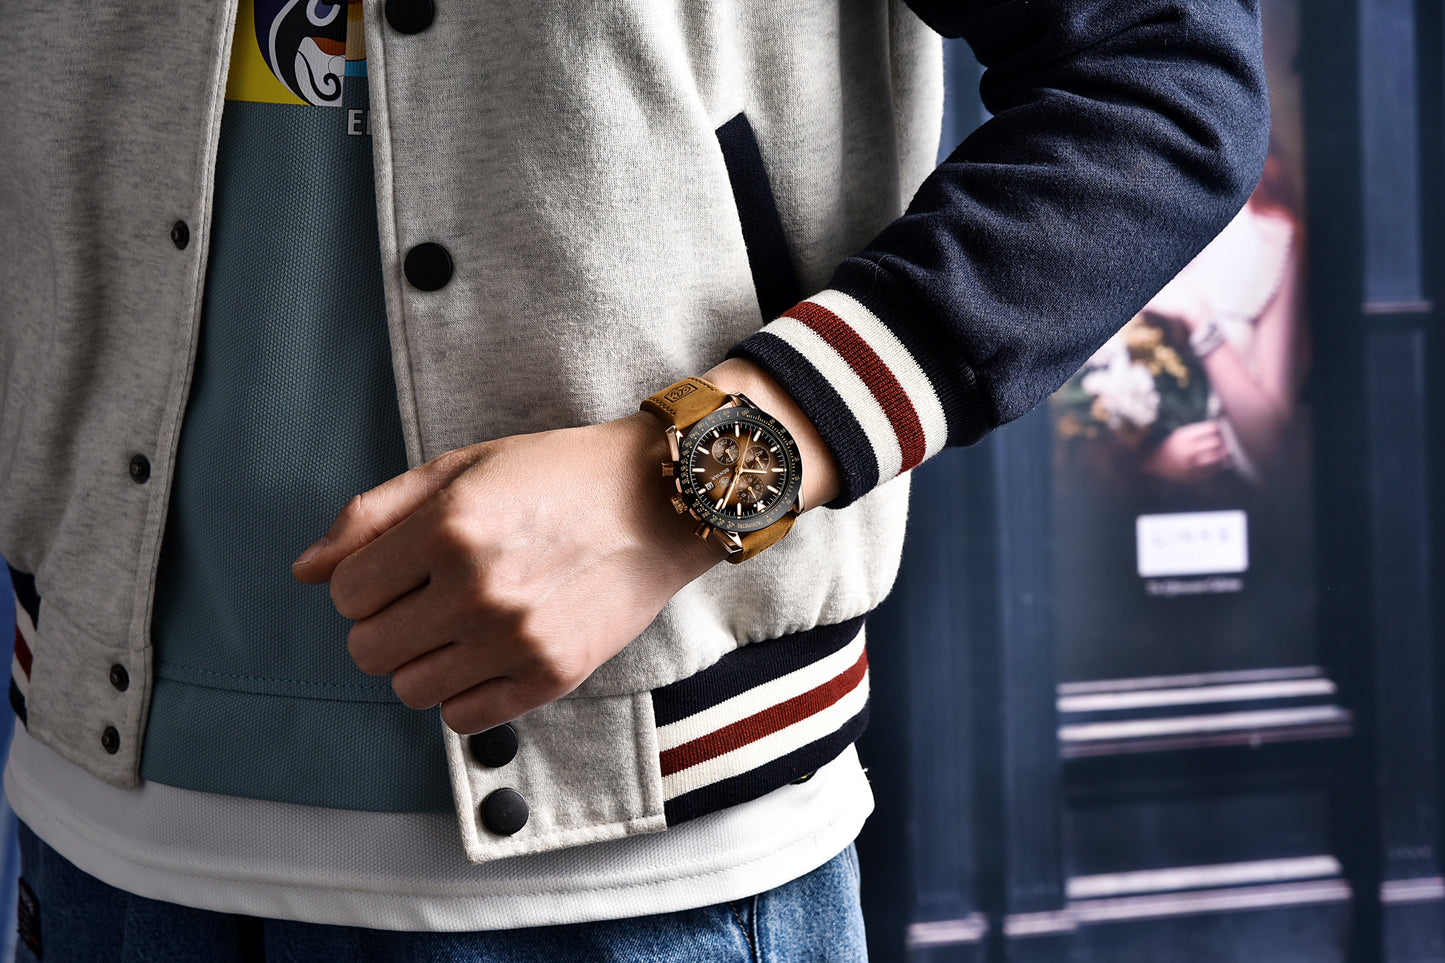 BENYAR - Stylish men's analog chronograph quartz watch with premium leather strap